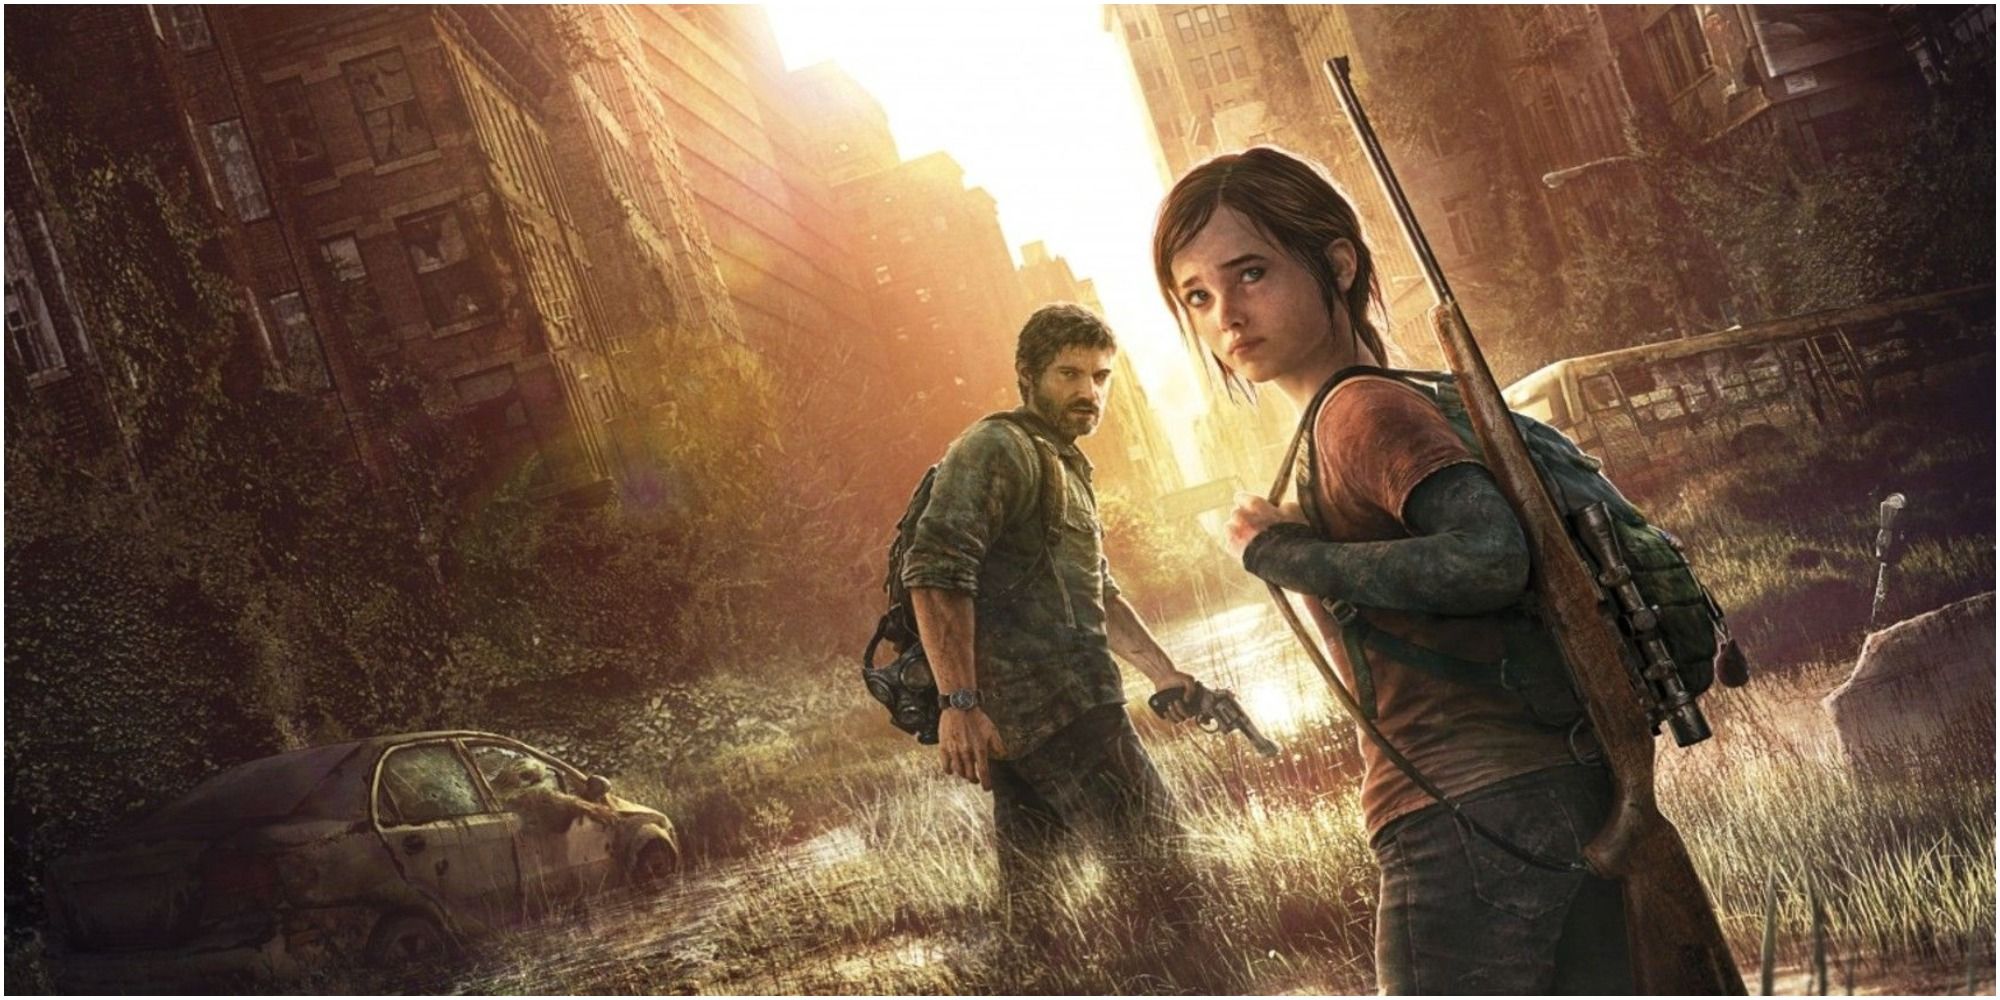 The Last Of Us Promotional Artwork Ellie And Joel walking through ruined city